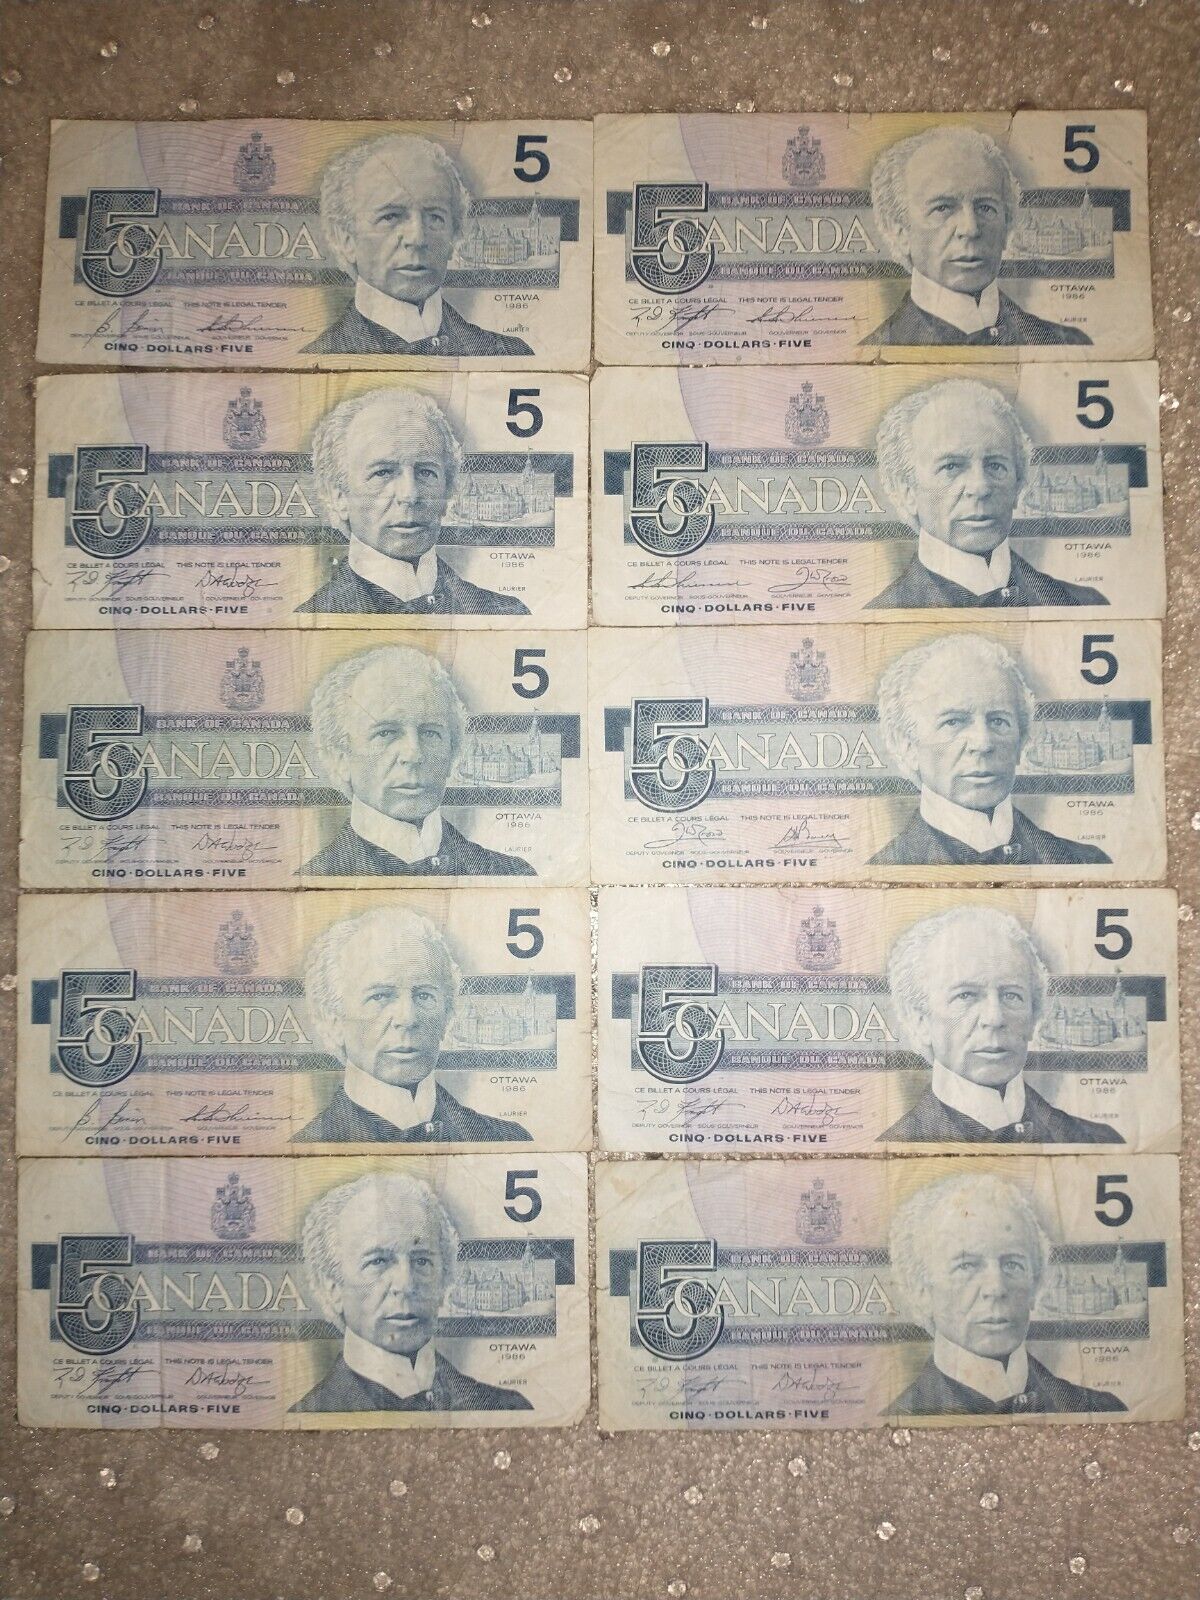 10x Canada 5 Dollar Bills Old Paper Money Birds Banknotes 1986 in Poor Condition